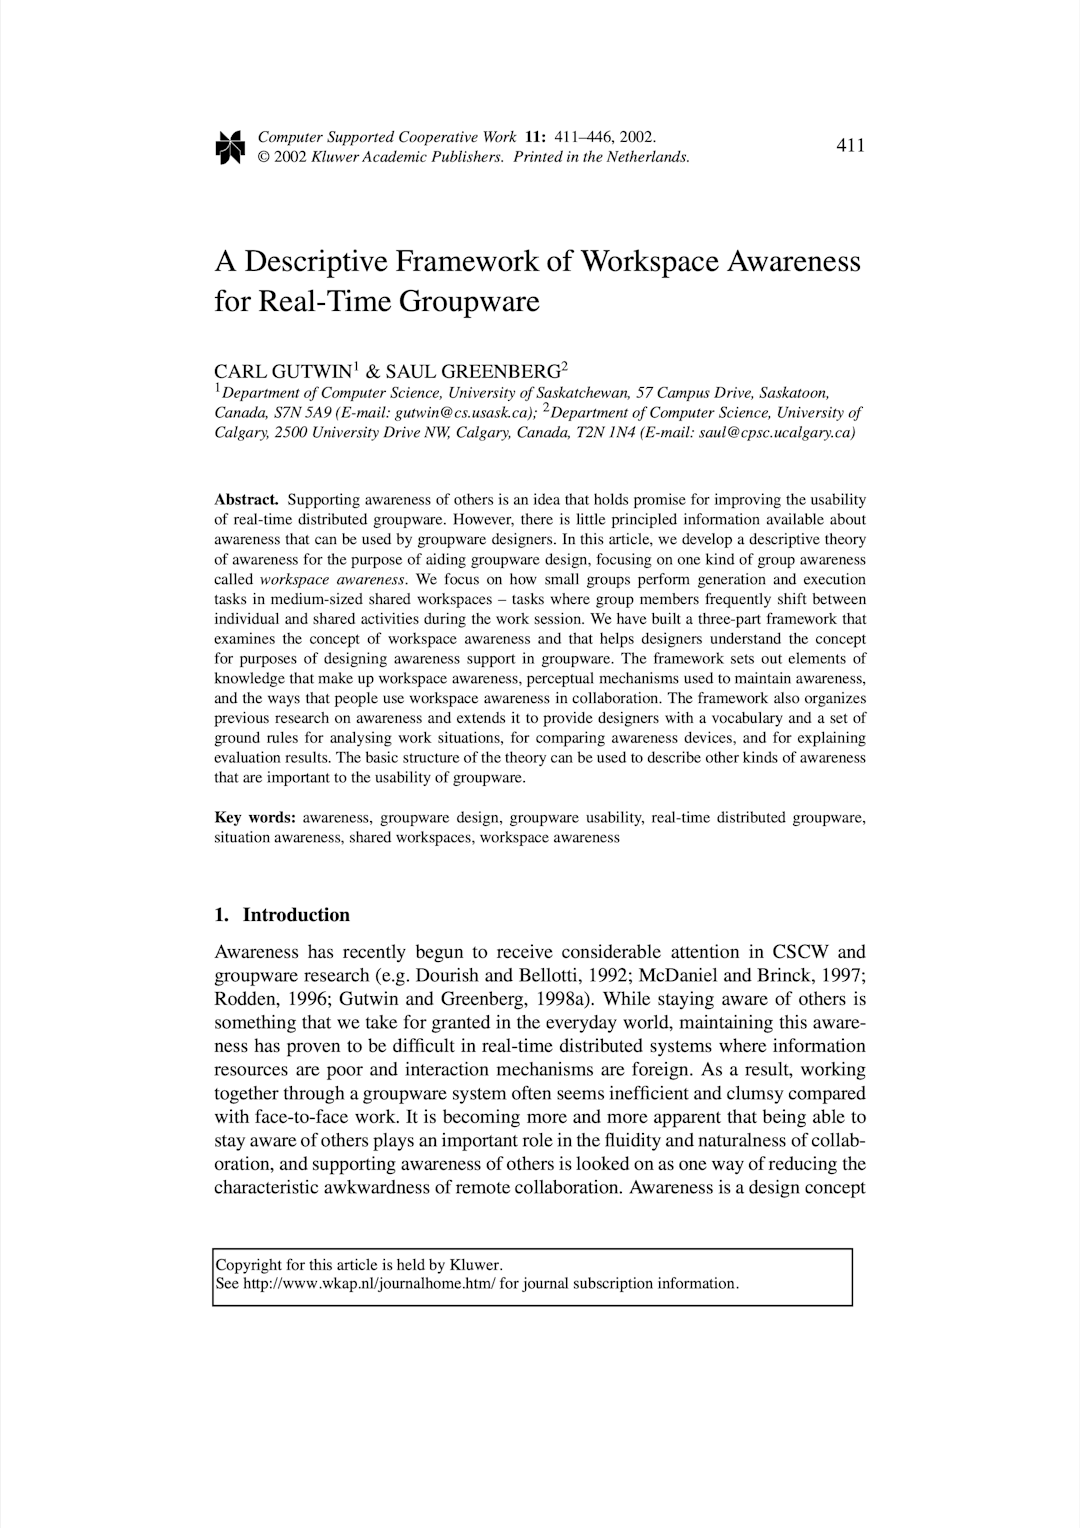 A Descriptive Framework of Workspace Awareness for Real-Time Groupware